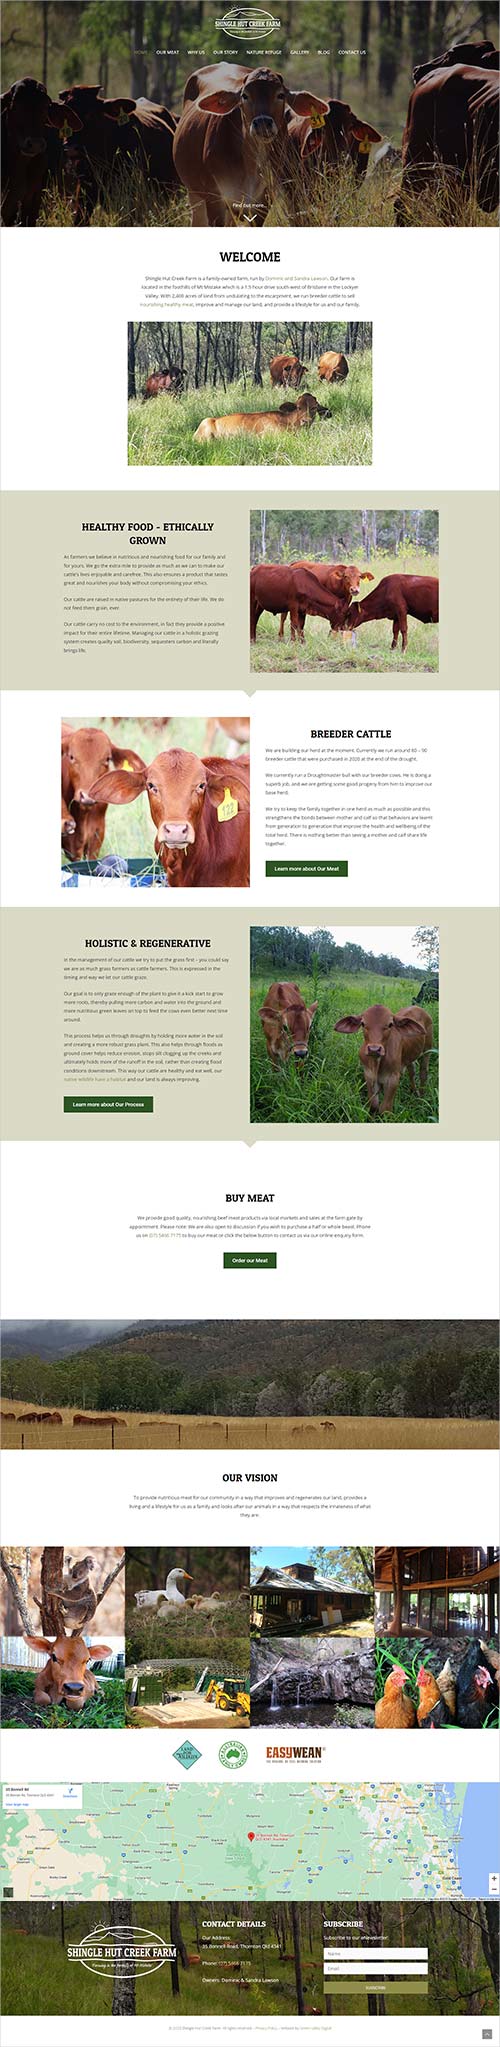 Farm business website - home page design